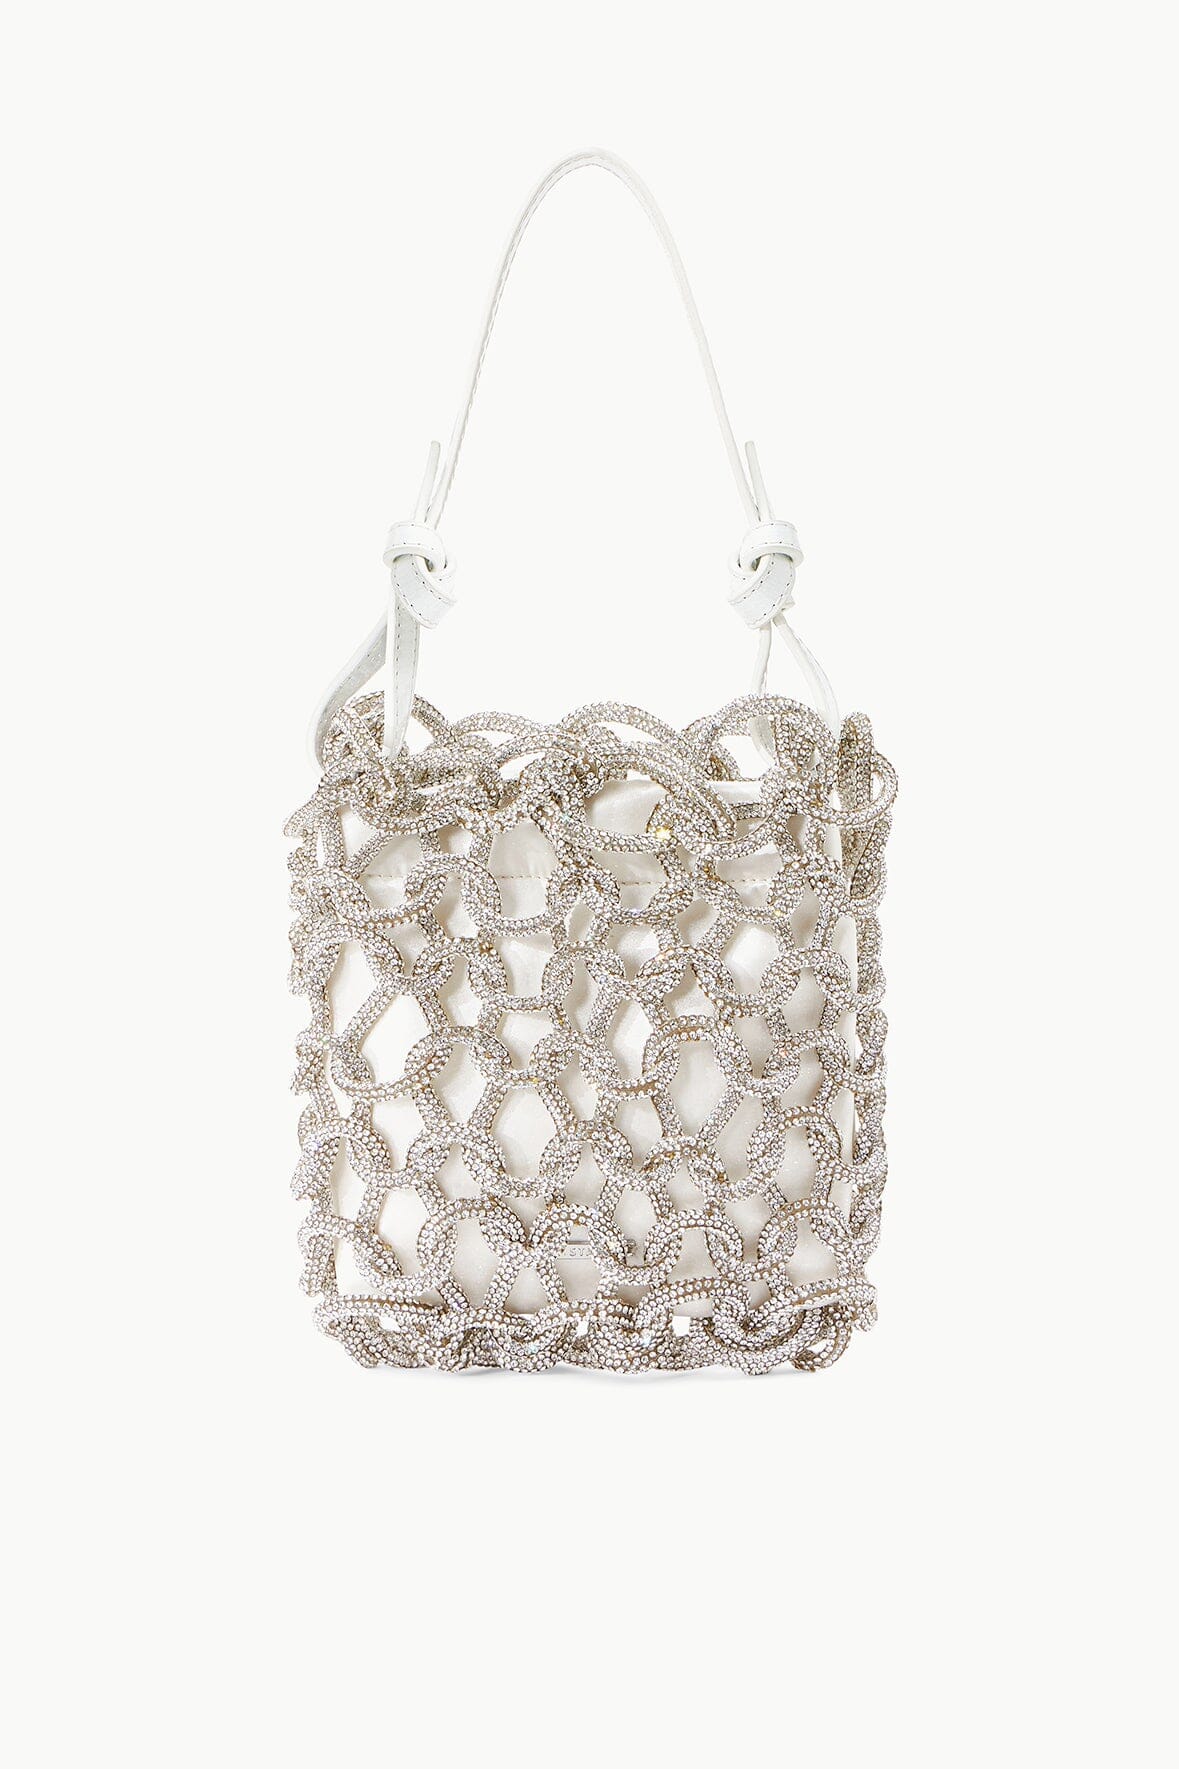 Crystal Handbags, Crystal Purses